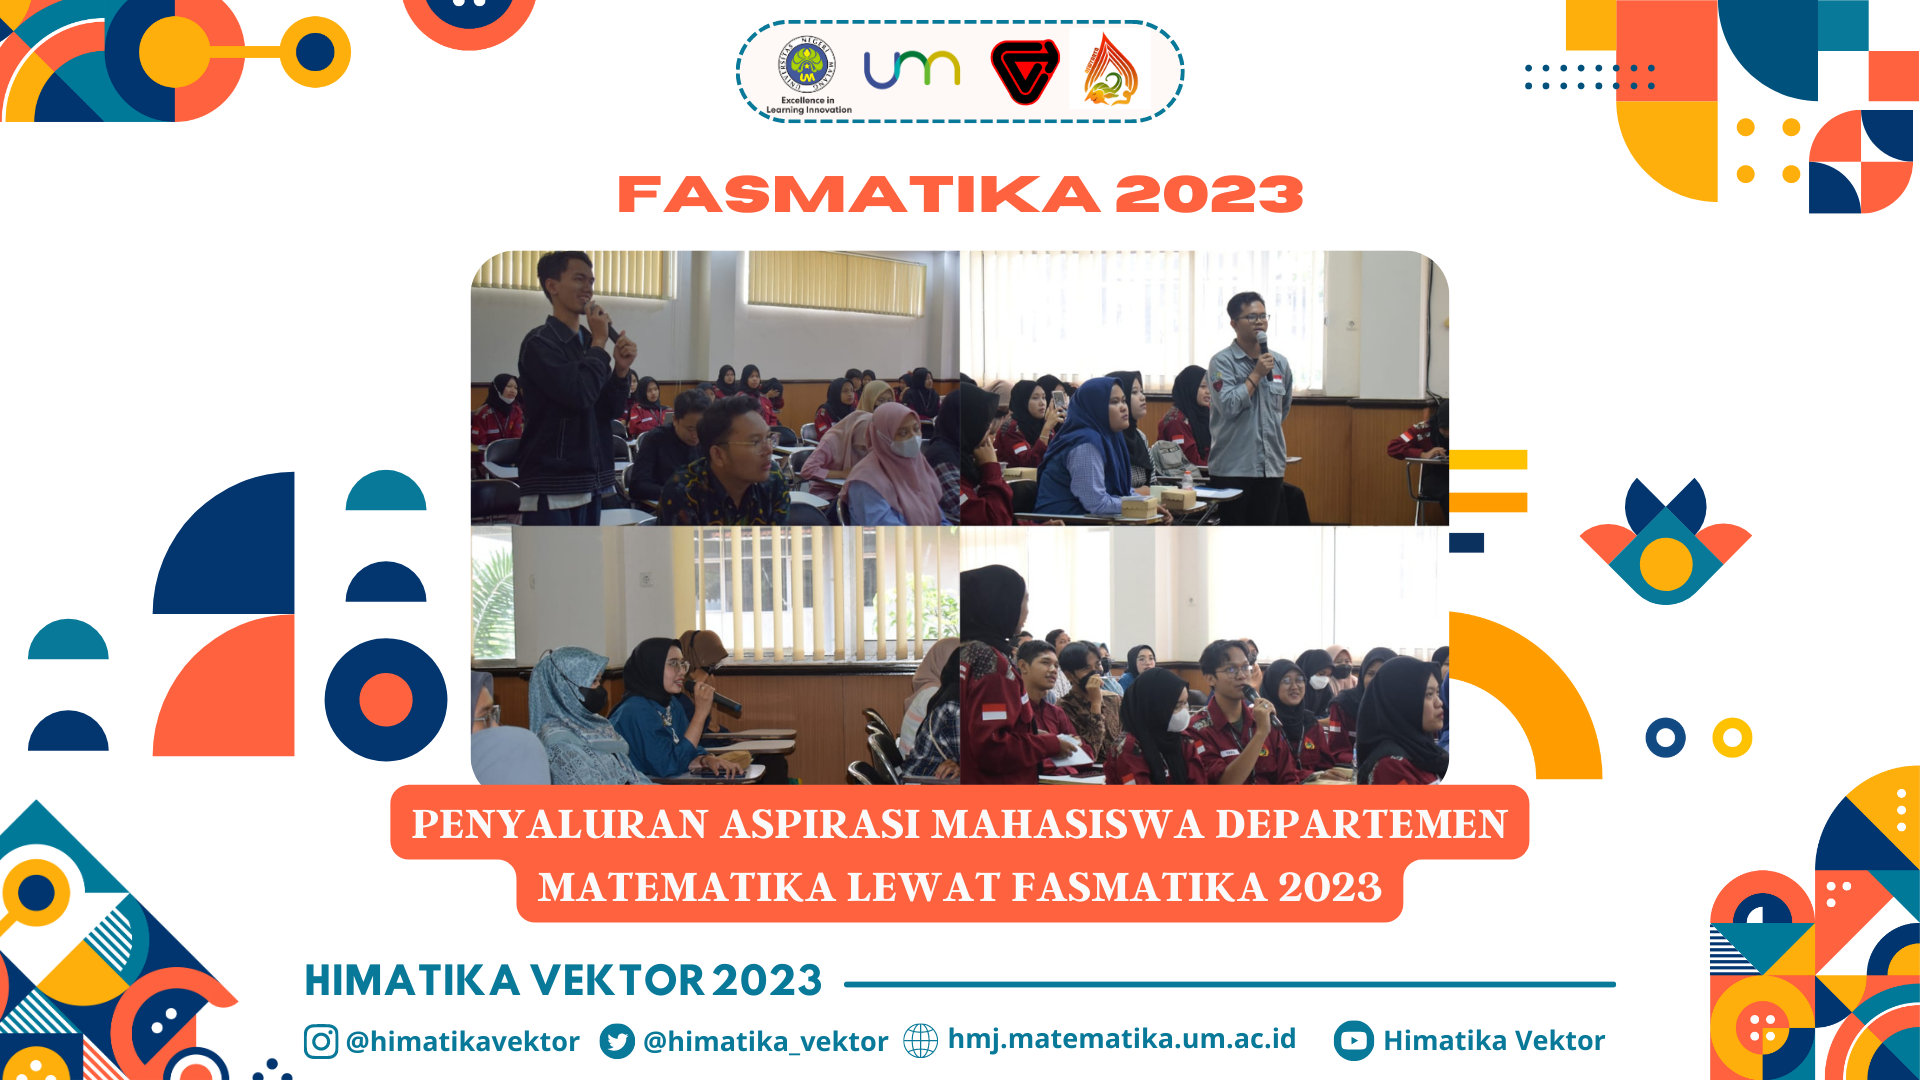 PENYALURAN ASPIRASI MAHASISWA DEPARTEMEN MATEMATIKA LEWAT FASMATIKA 2023